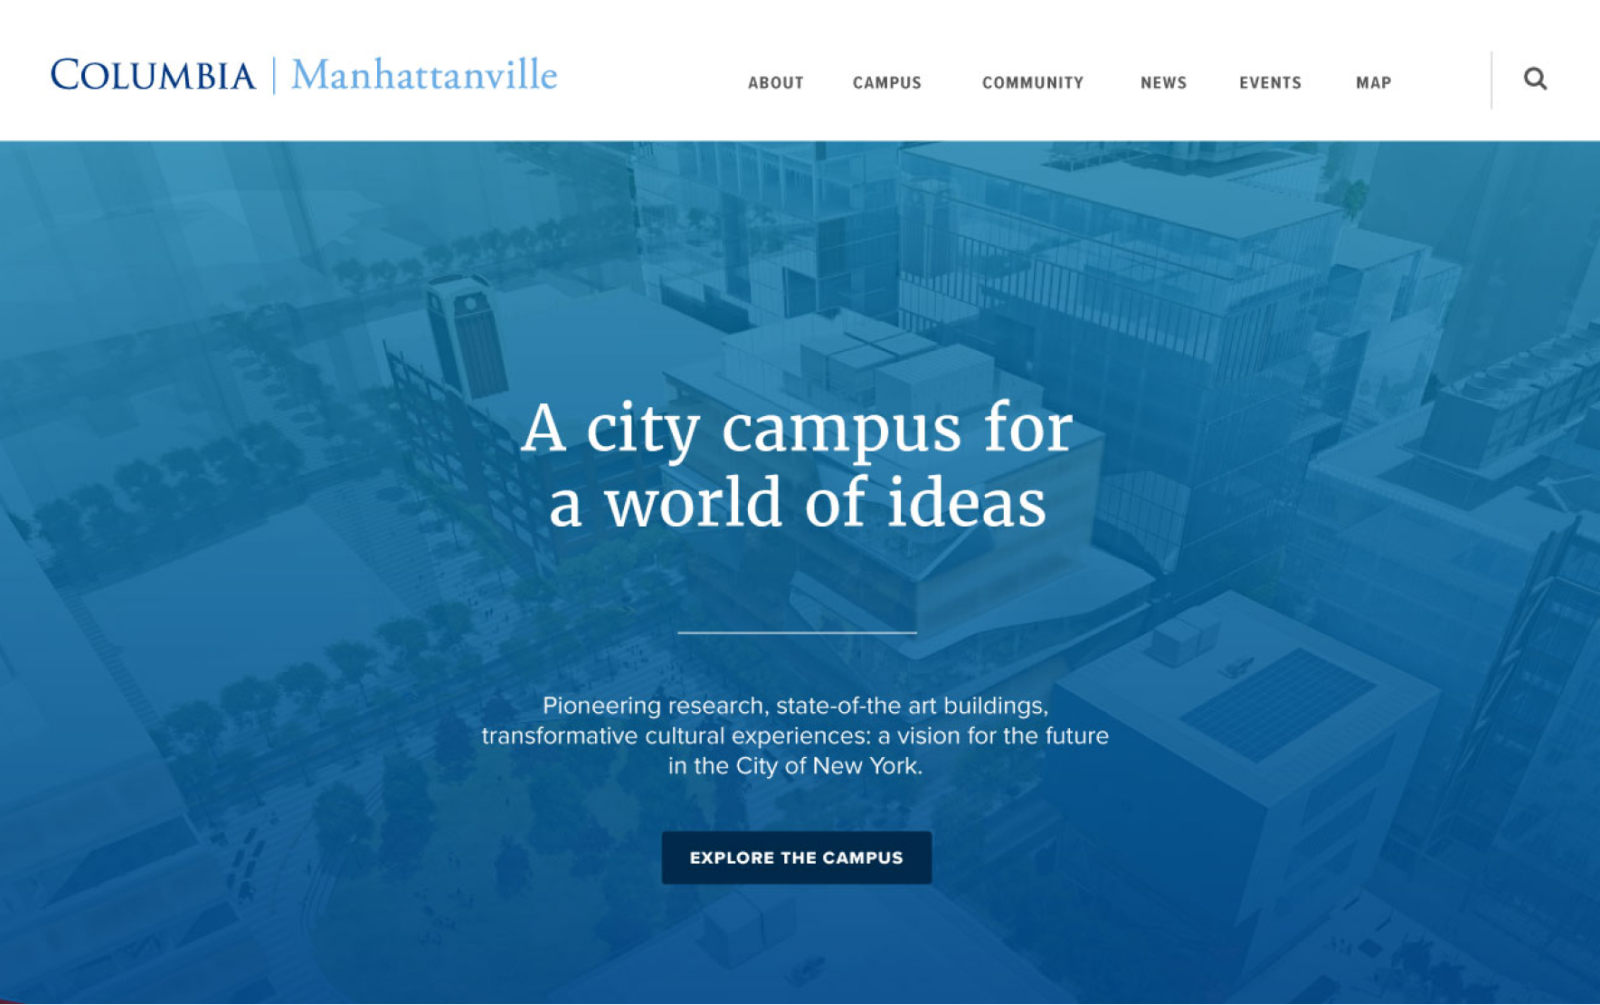 Columbia University Manhattanville 1st asset a